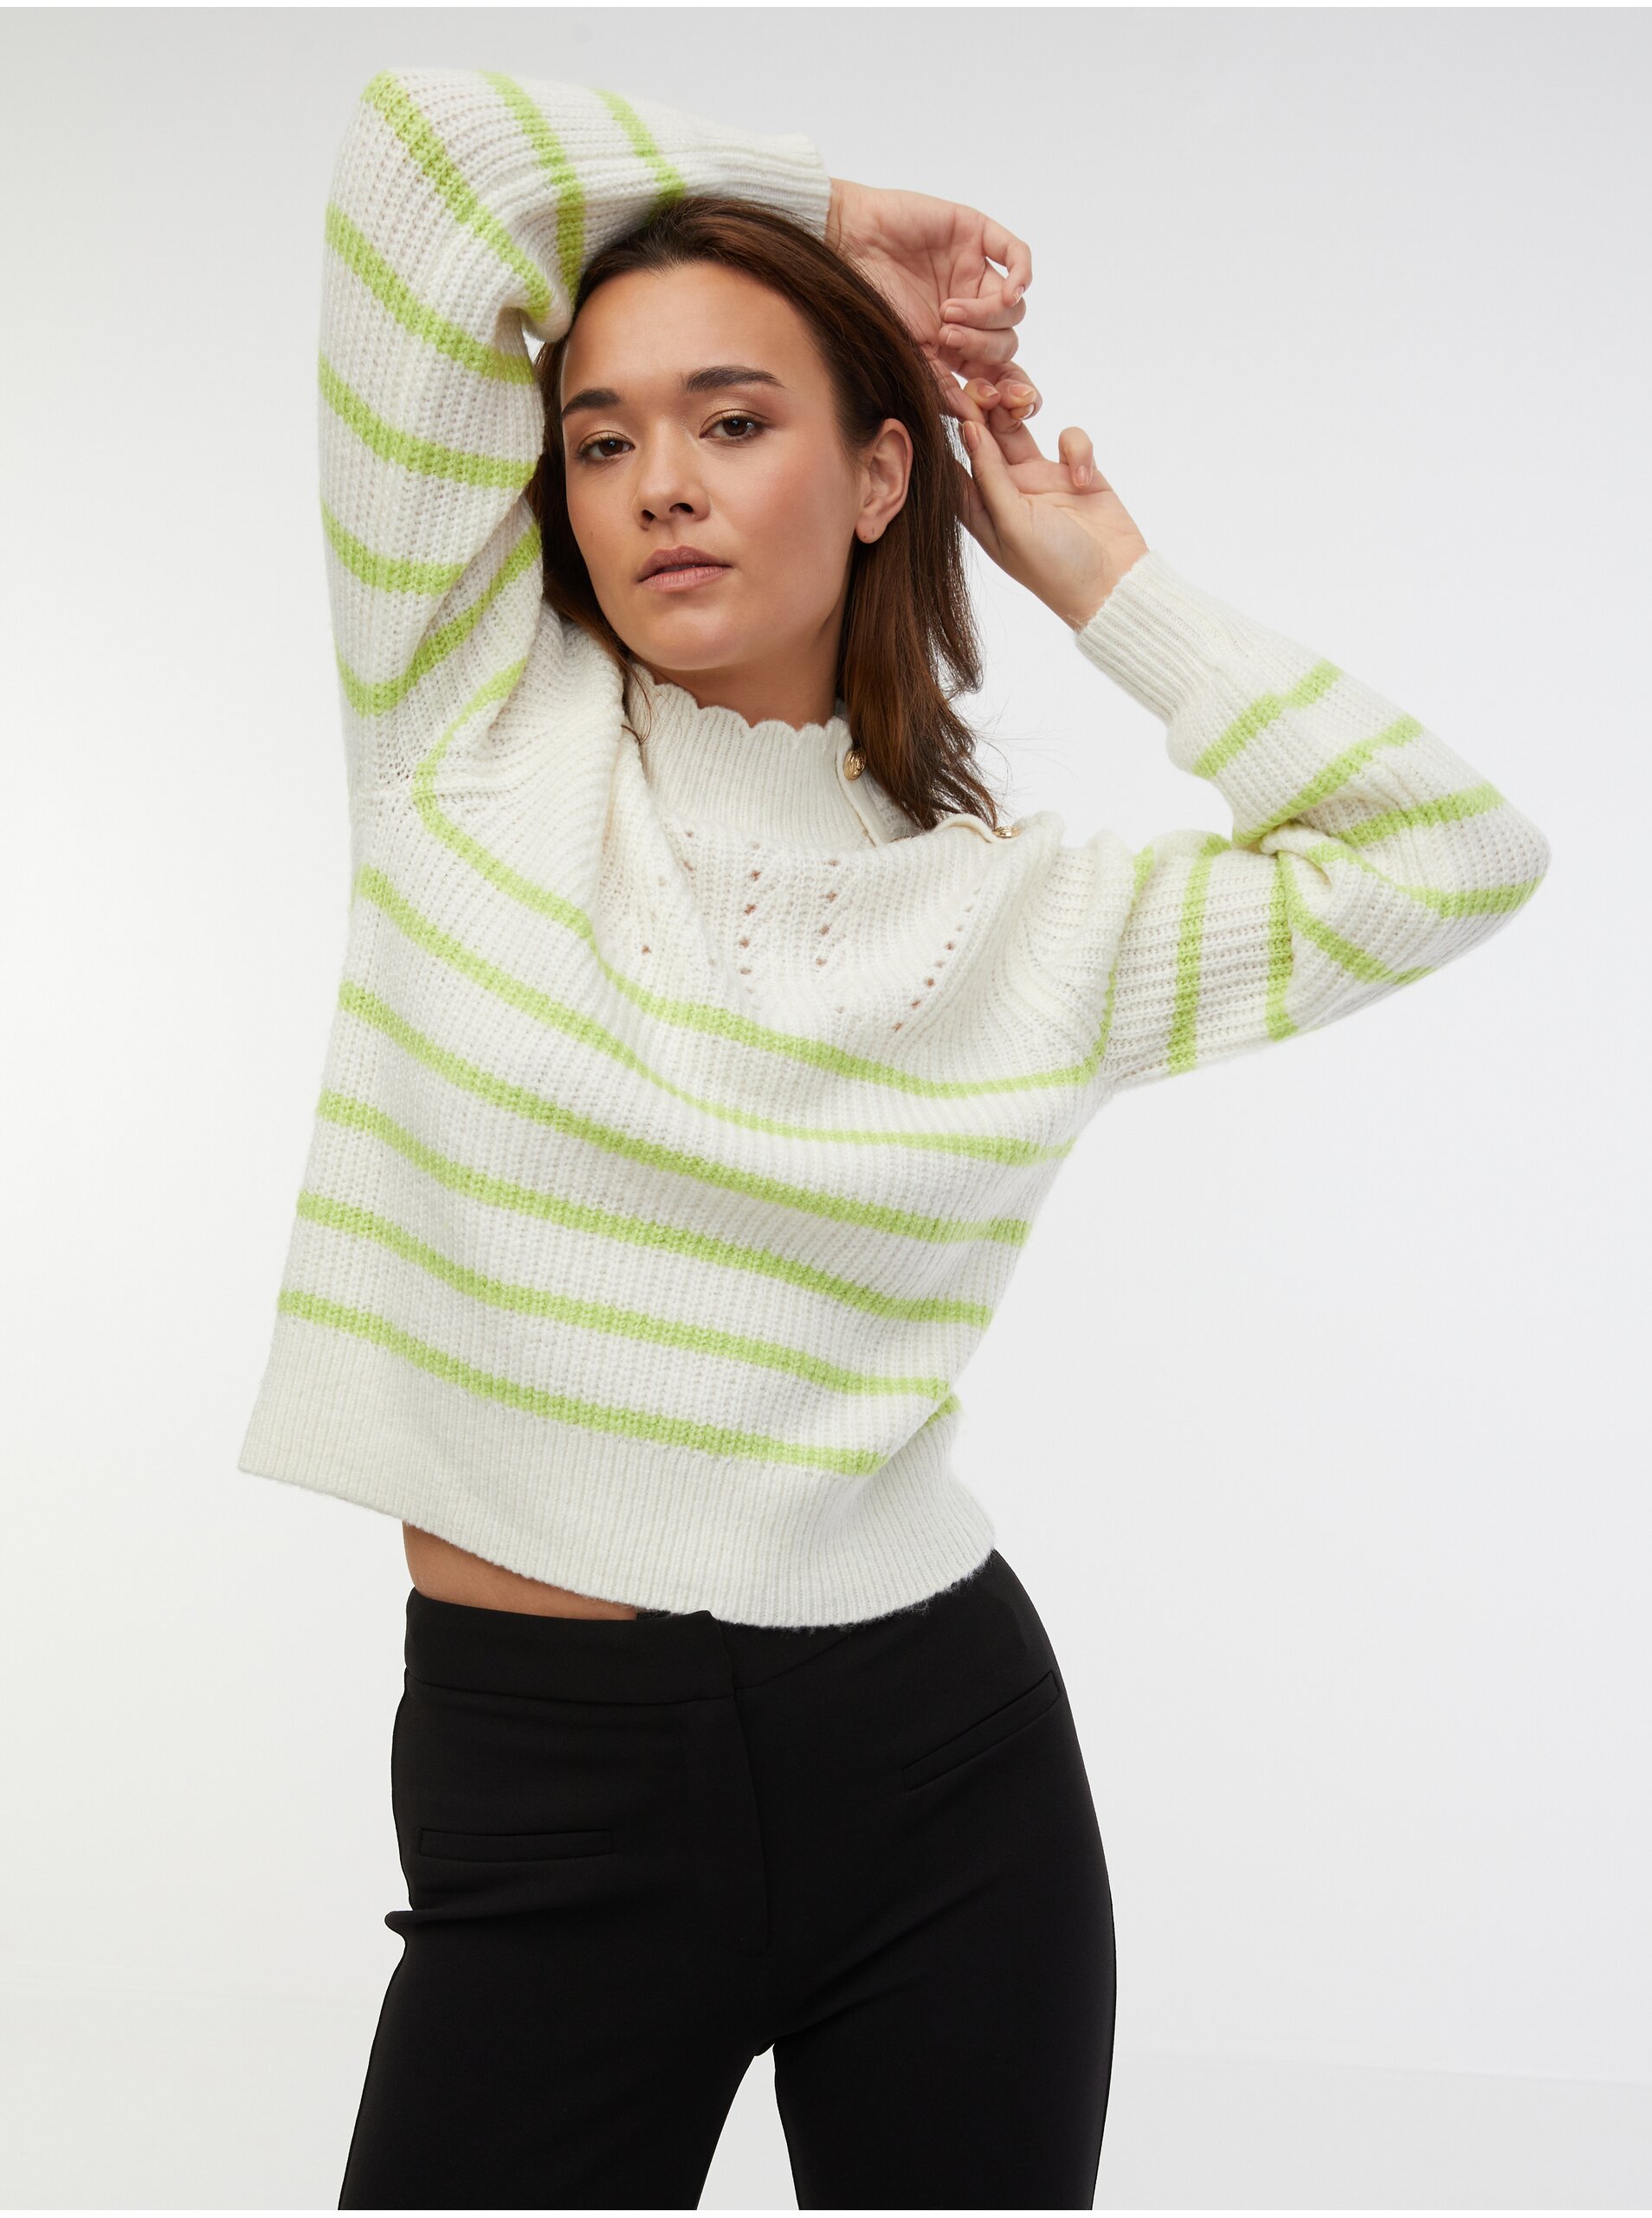 E-shop Zeleno-biely dámsky pruhovaný sveter s prímesou vlny ORSAY